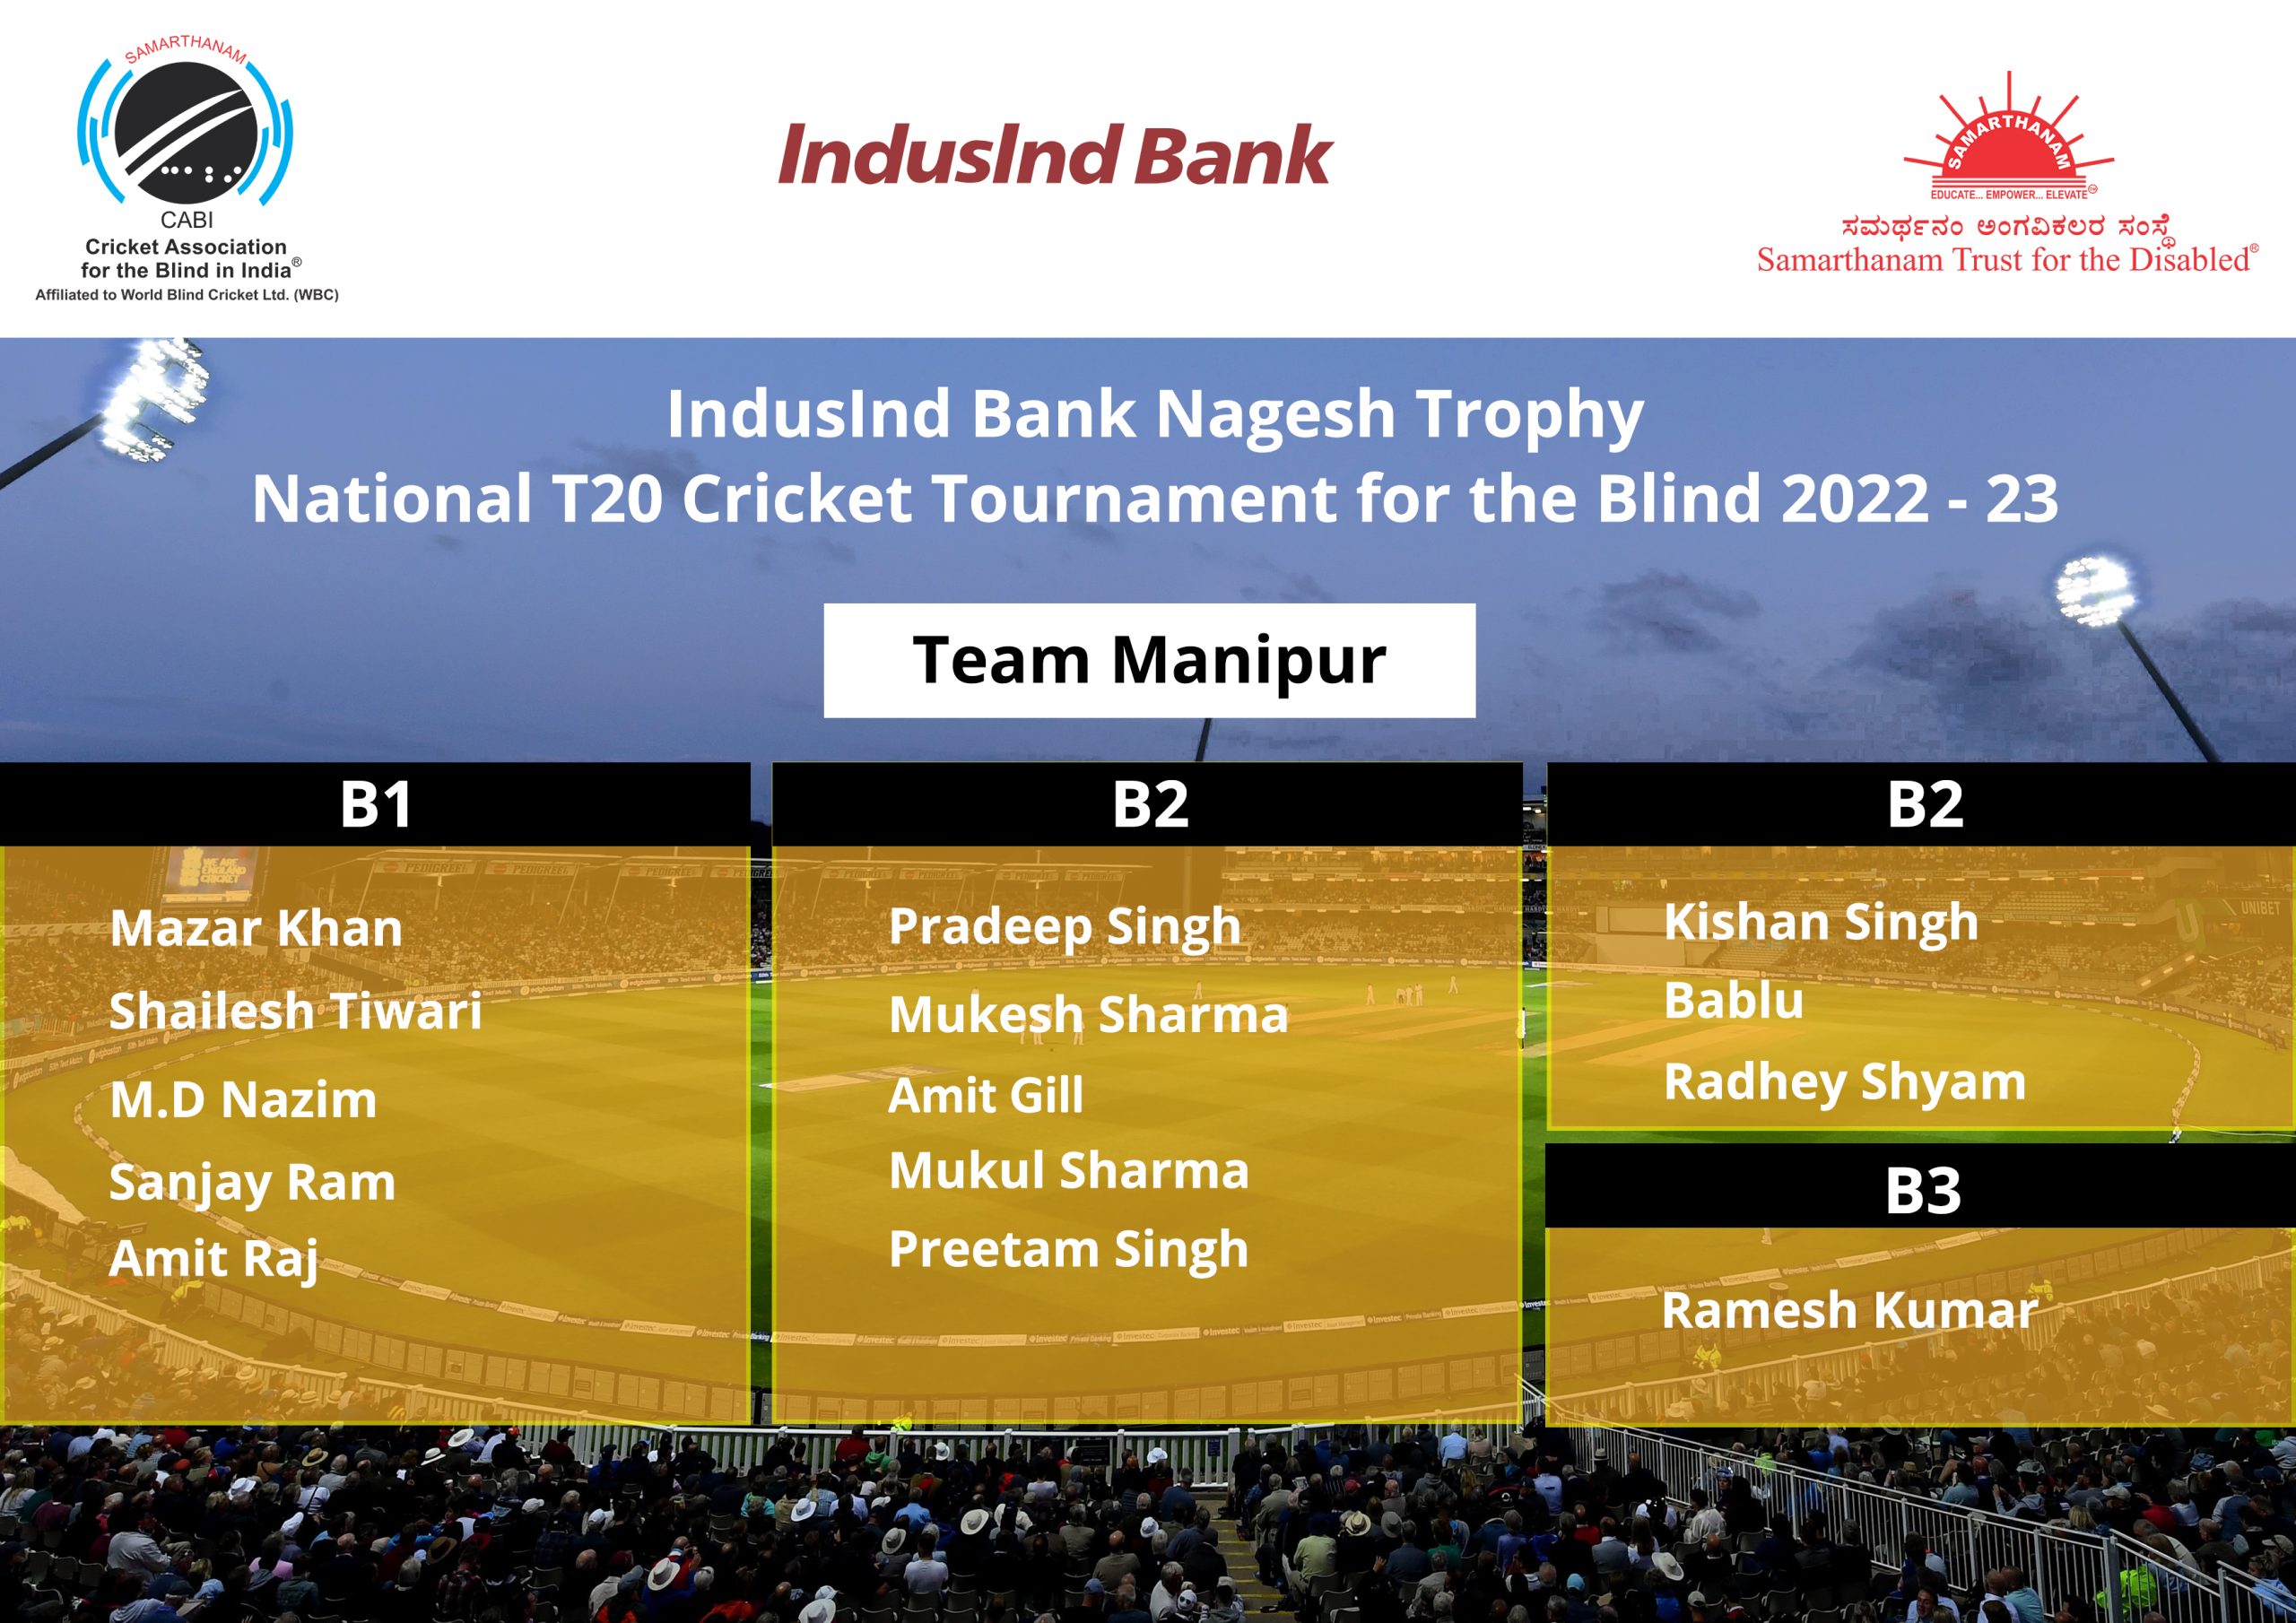 Team Manipur of IndusInd Bank Nagesh Trophy National T20 Cricket Tournament For The Blind 2022-23